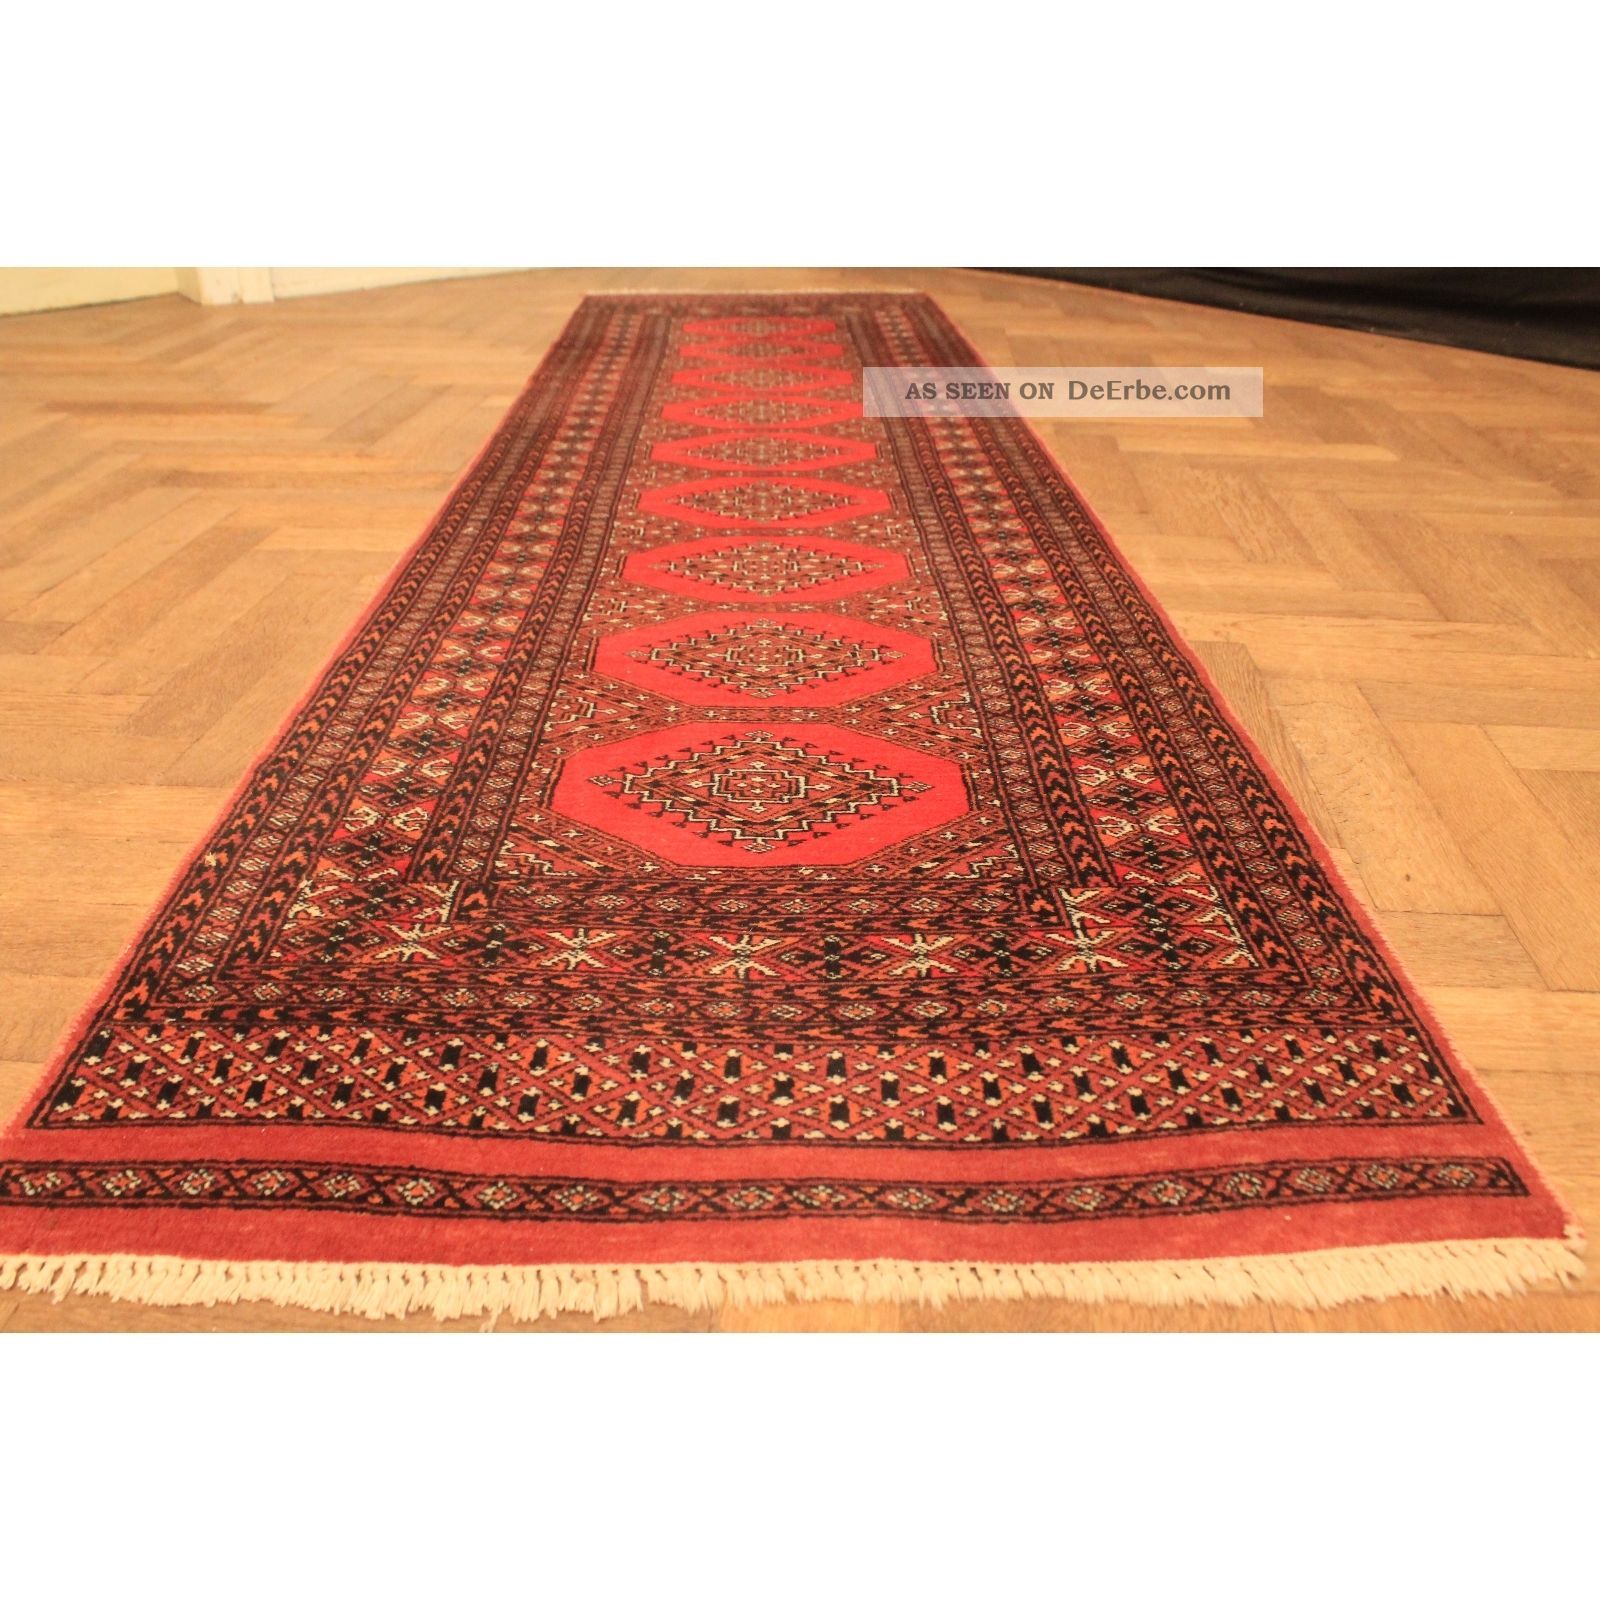 Fein Handgeknüpfter Orient Buchara Jomut Teppich Carpet Tappeto Tapis 300x80cm Teppiche & Flachgewebe Bild